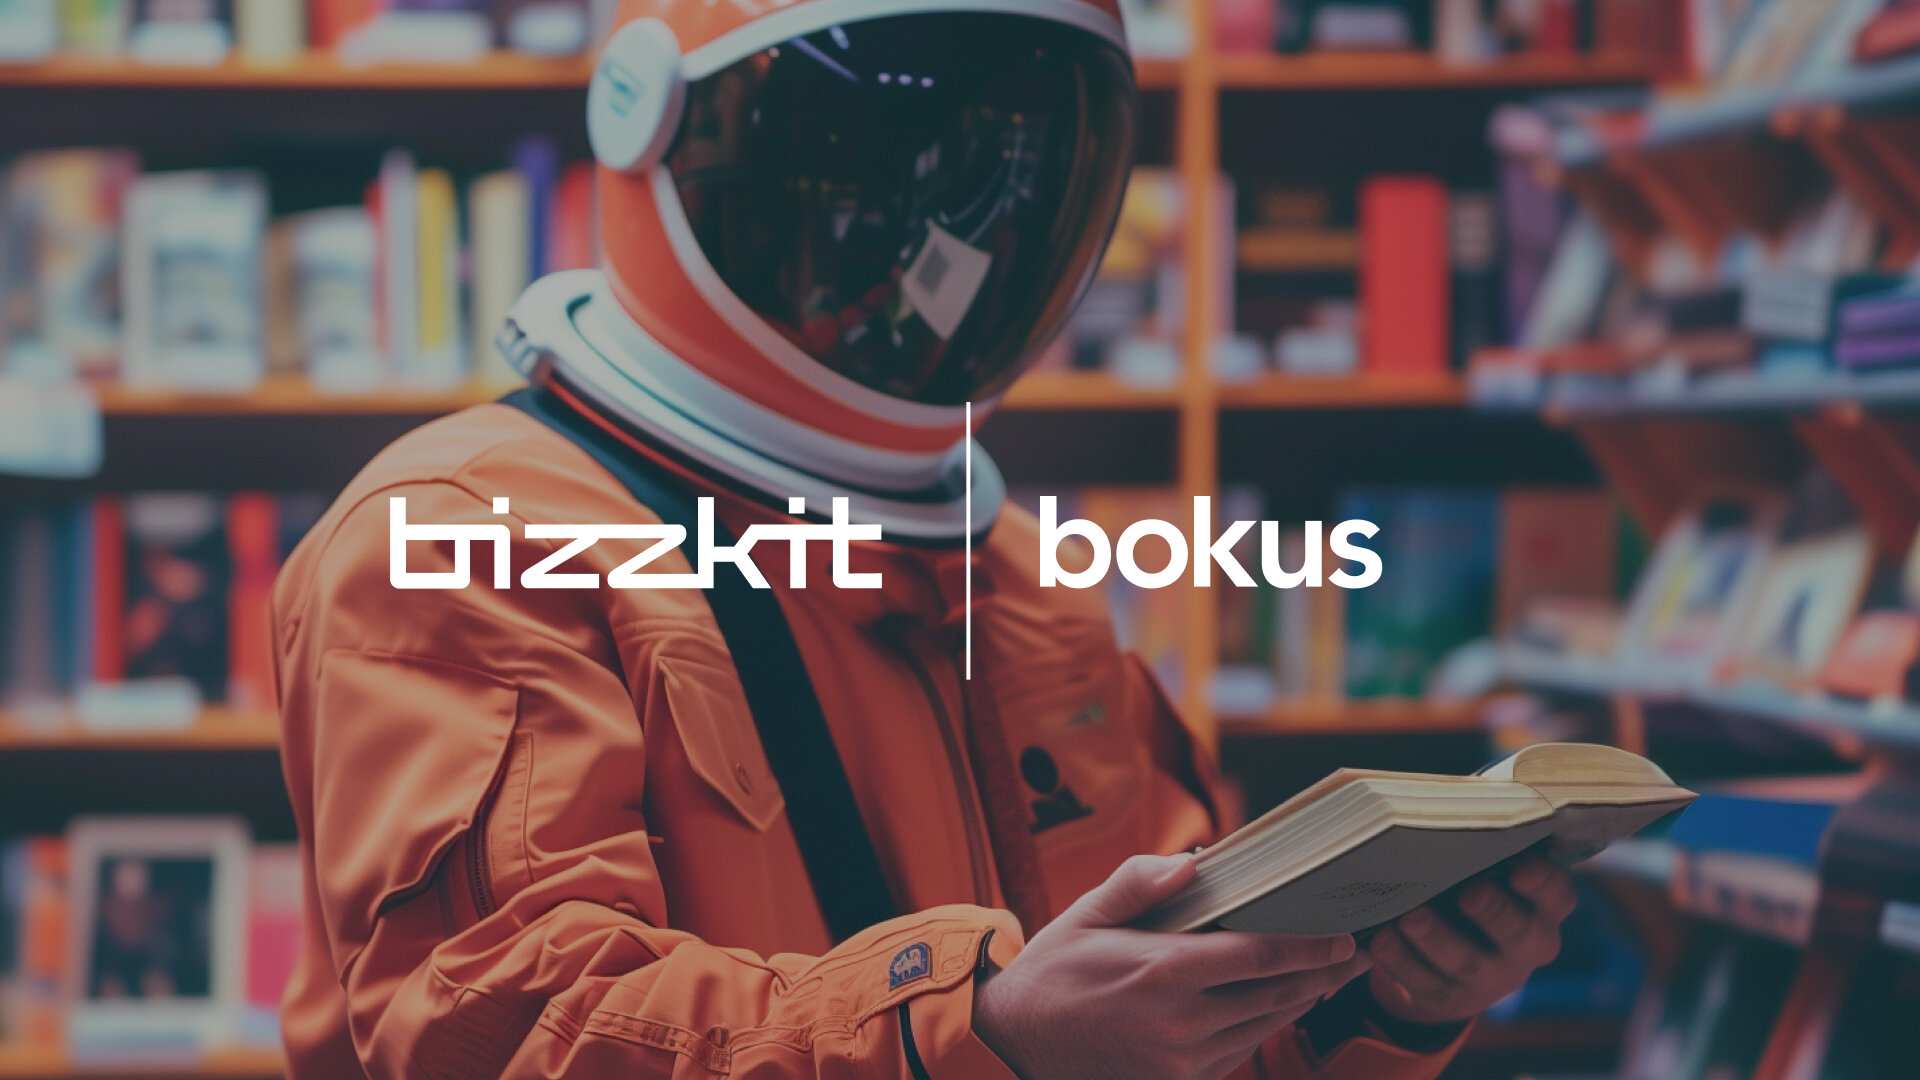 Bokusgruppen chooses Bizzkit to grow their online business